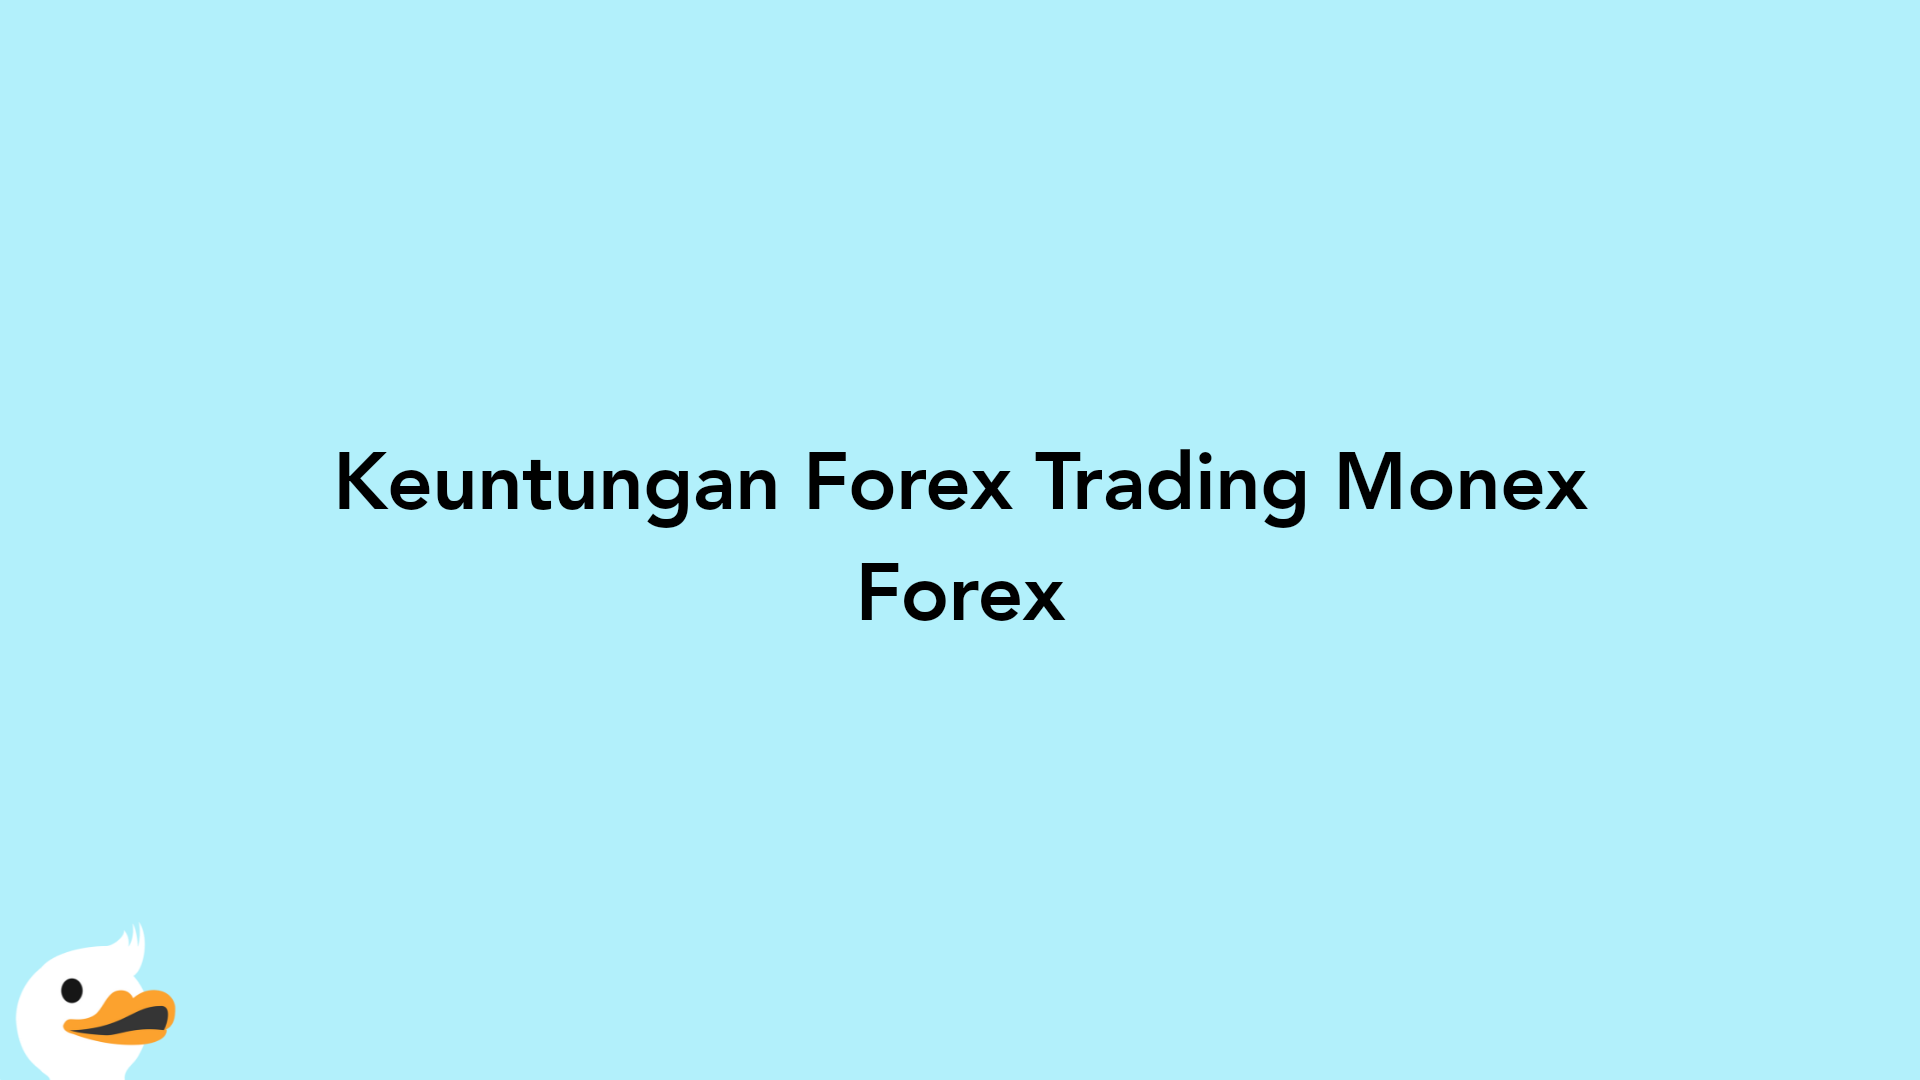 Keuntungan Forex Trading Monex Forex